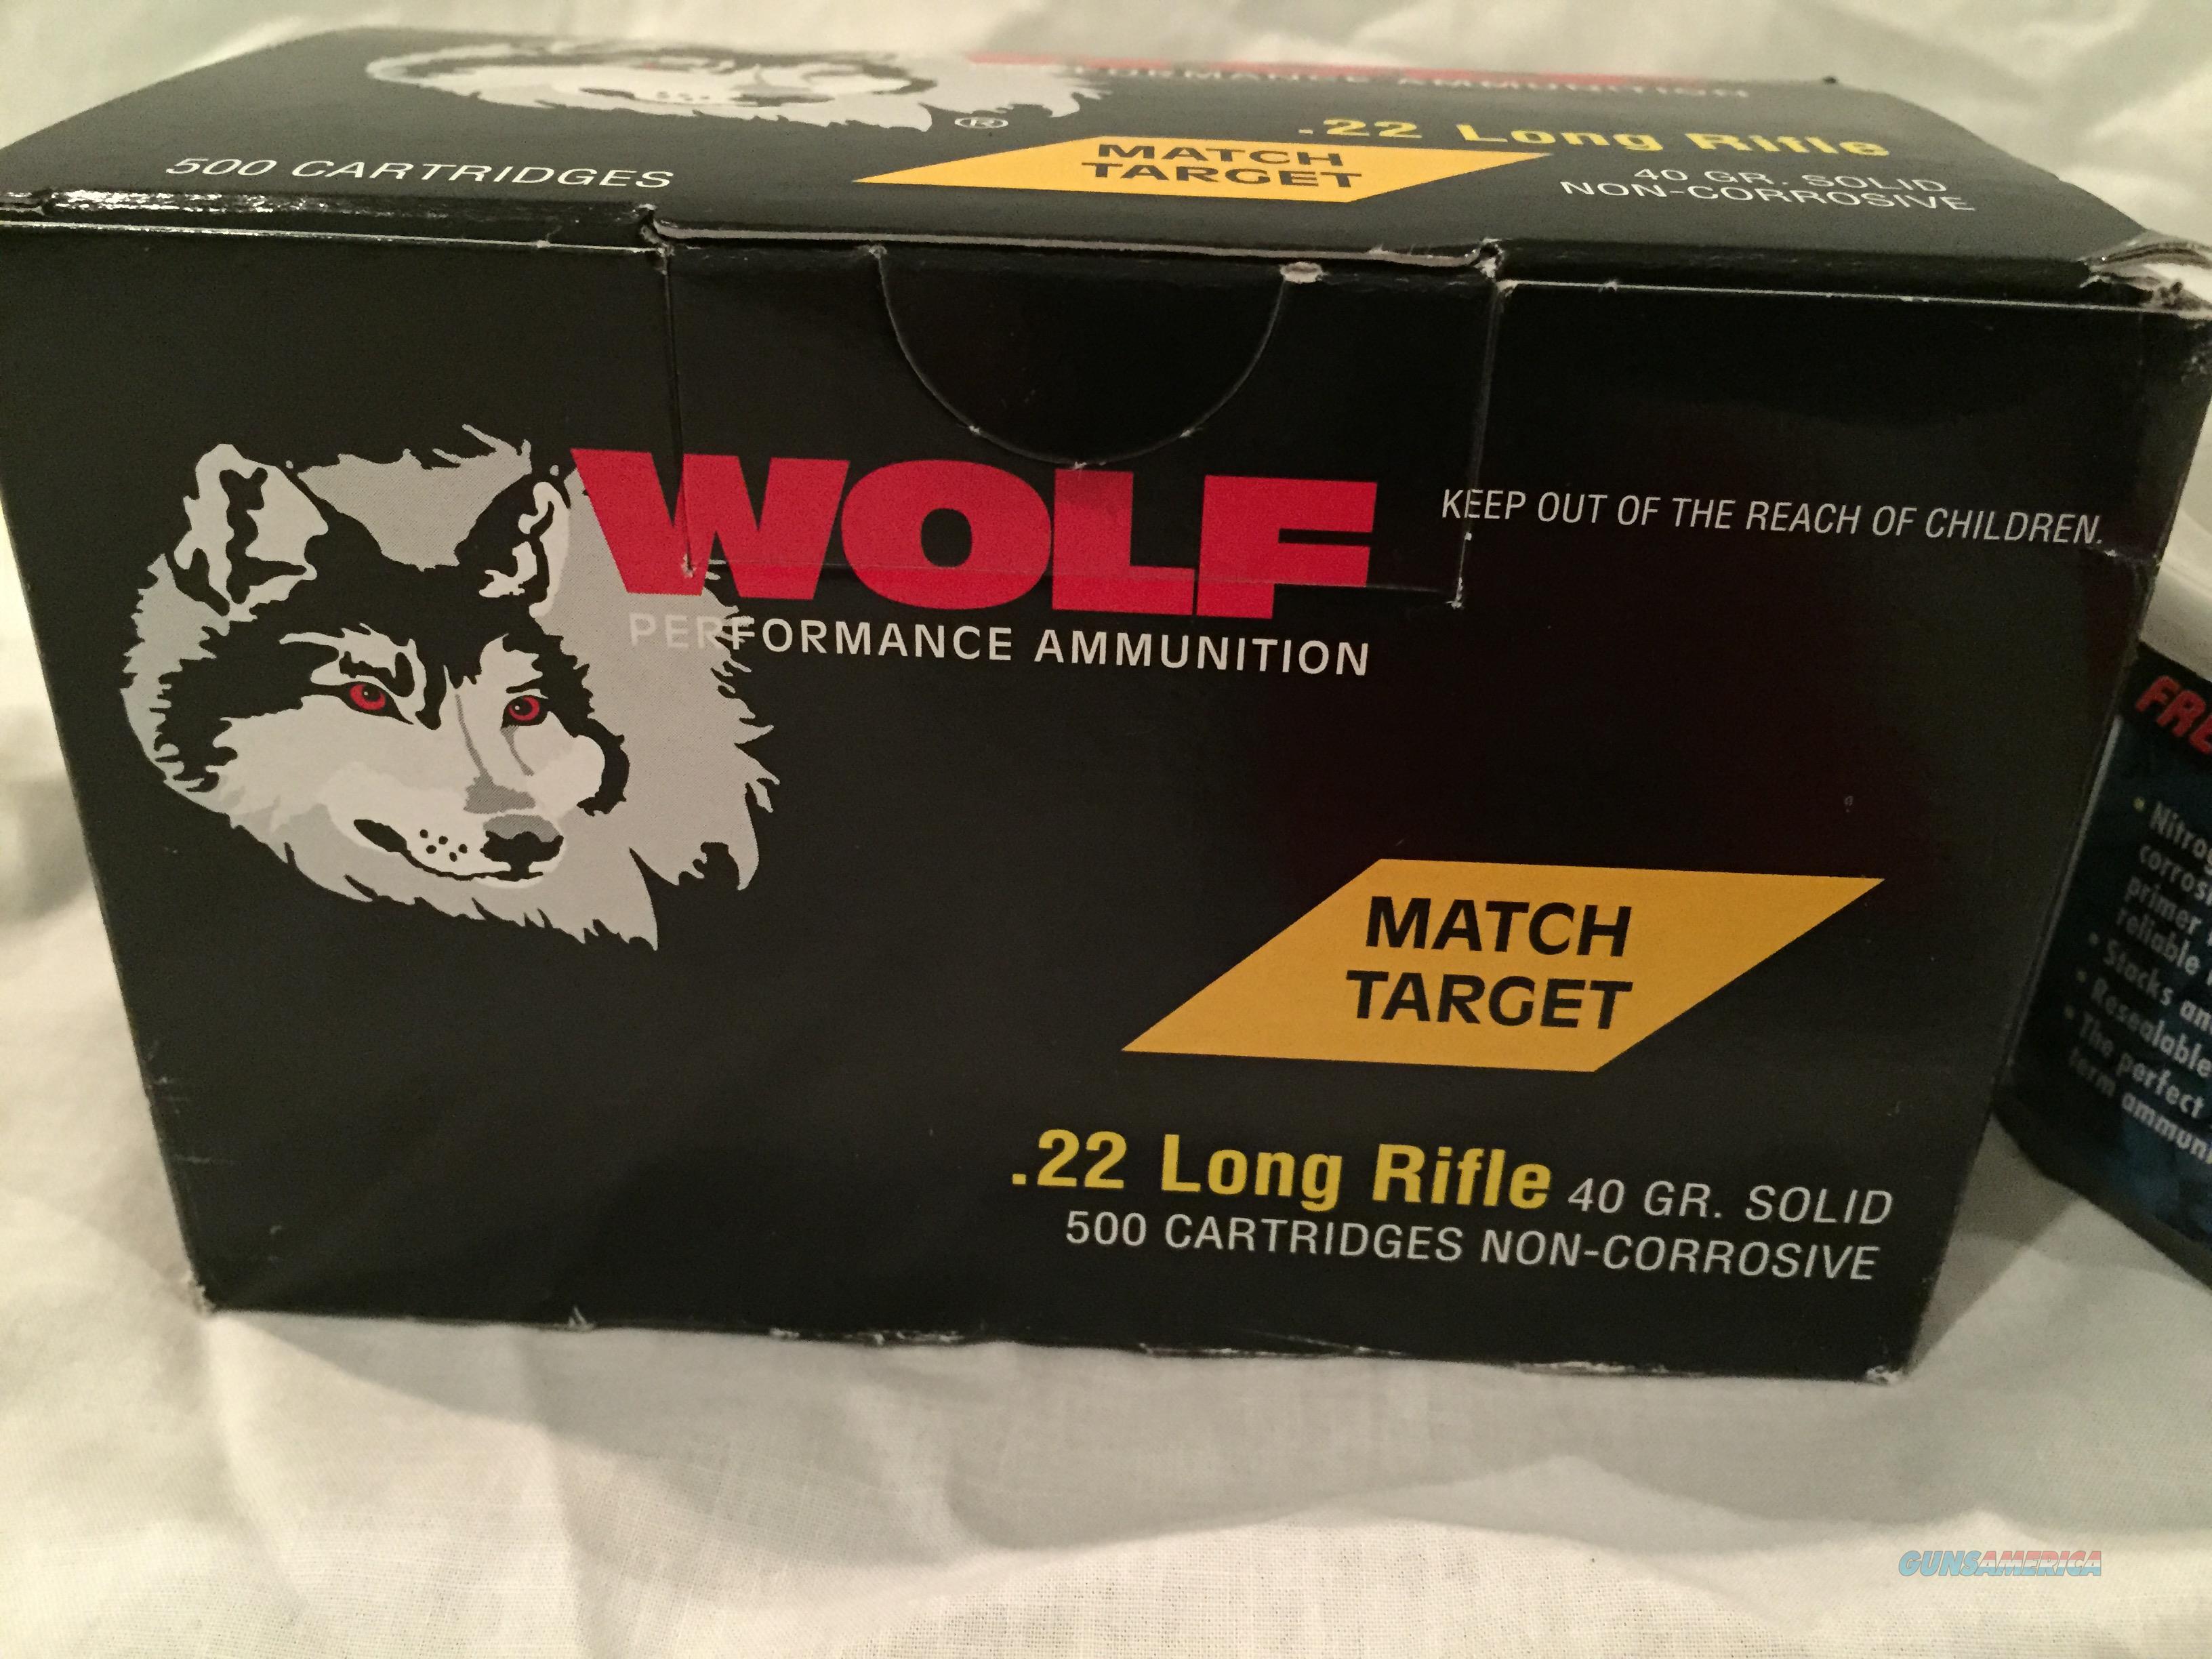 Wolf .22 Long Rifle / Match Target ... for sale at Gunsamerica.com ...